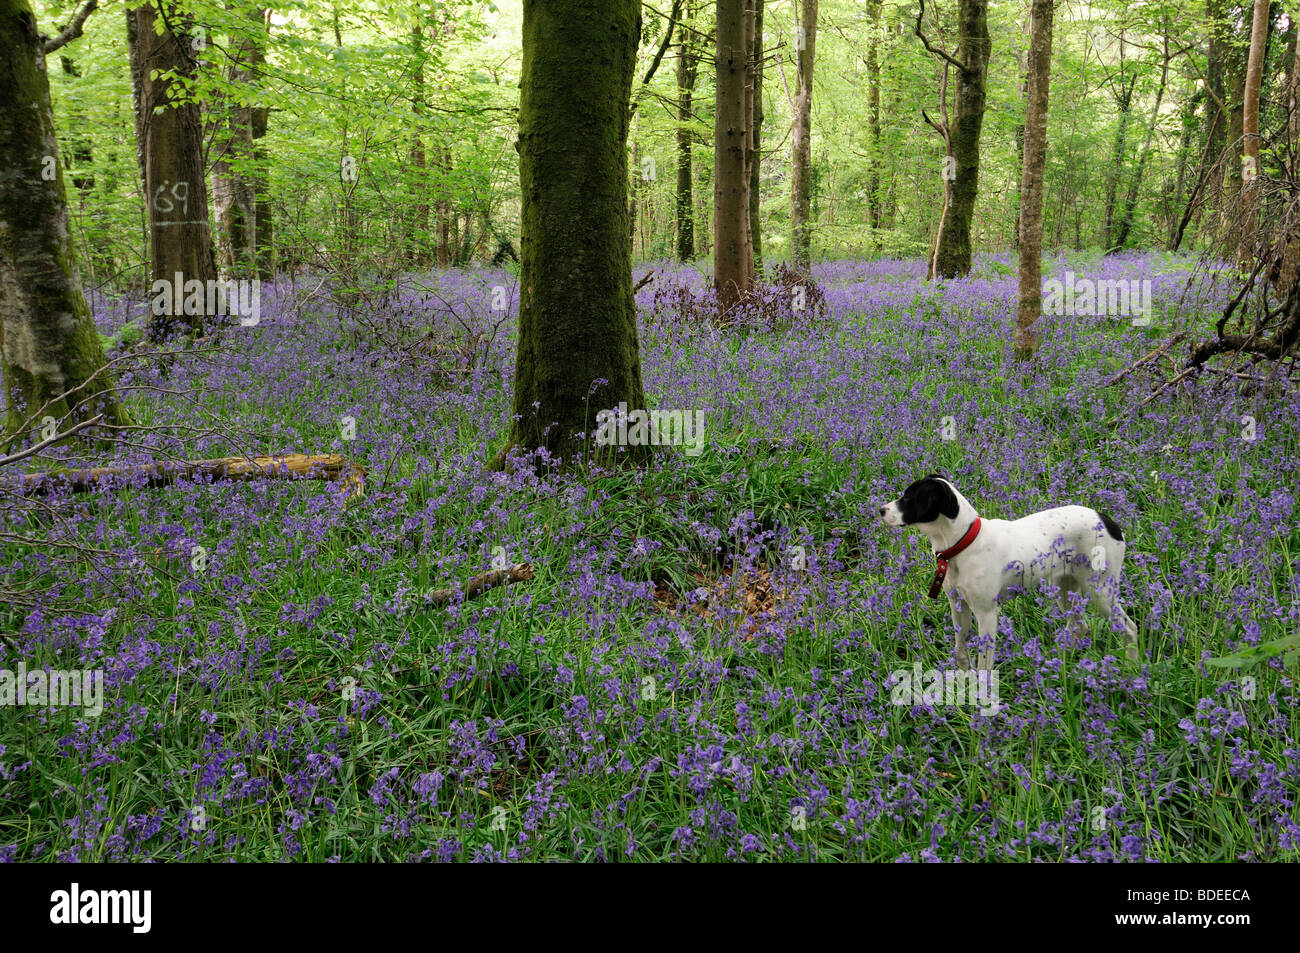 White dog standing watch watching Carpet of bluebells in Jenkinstown Wood County Kilkenny Ireland Stock Photo